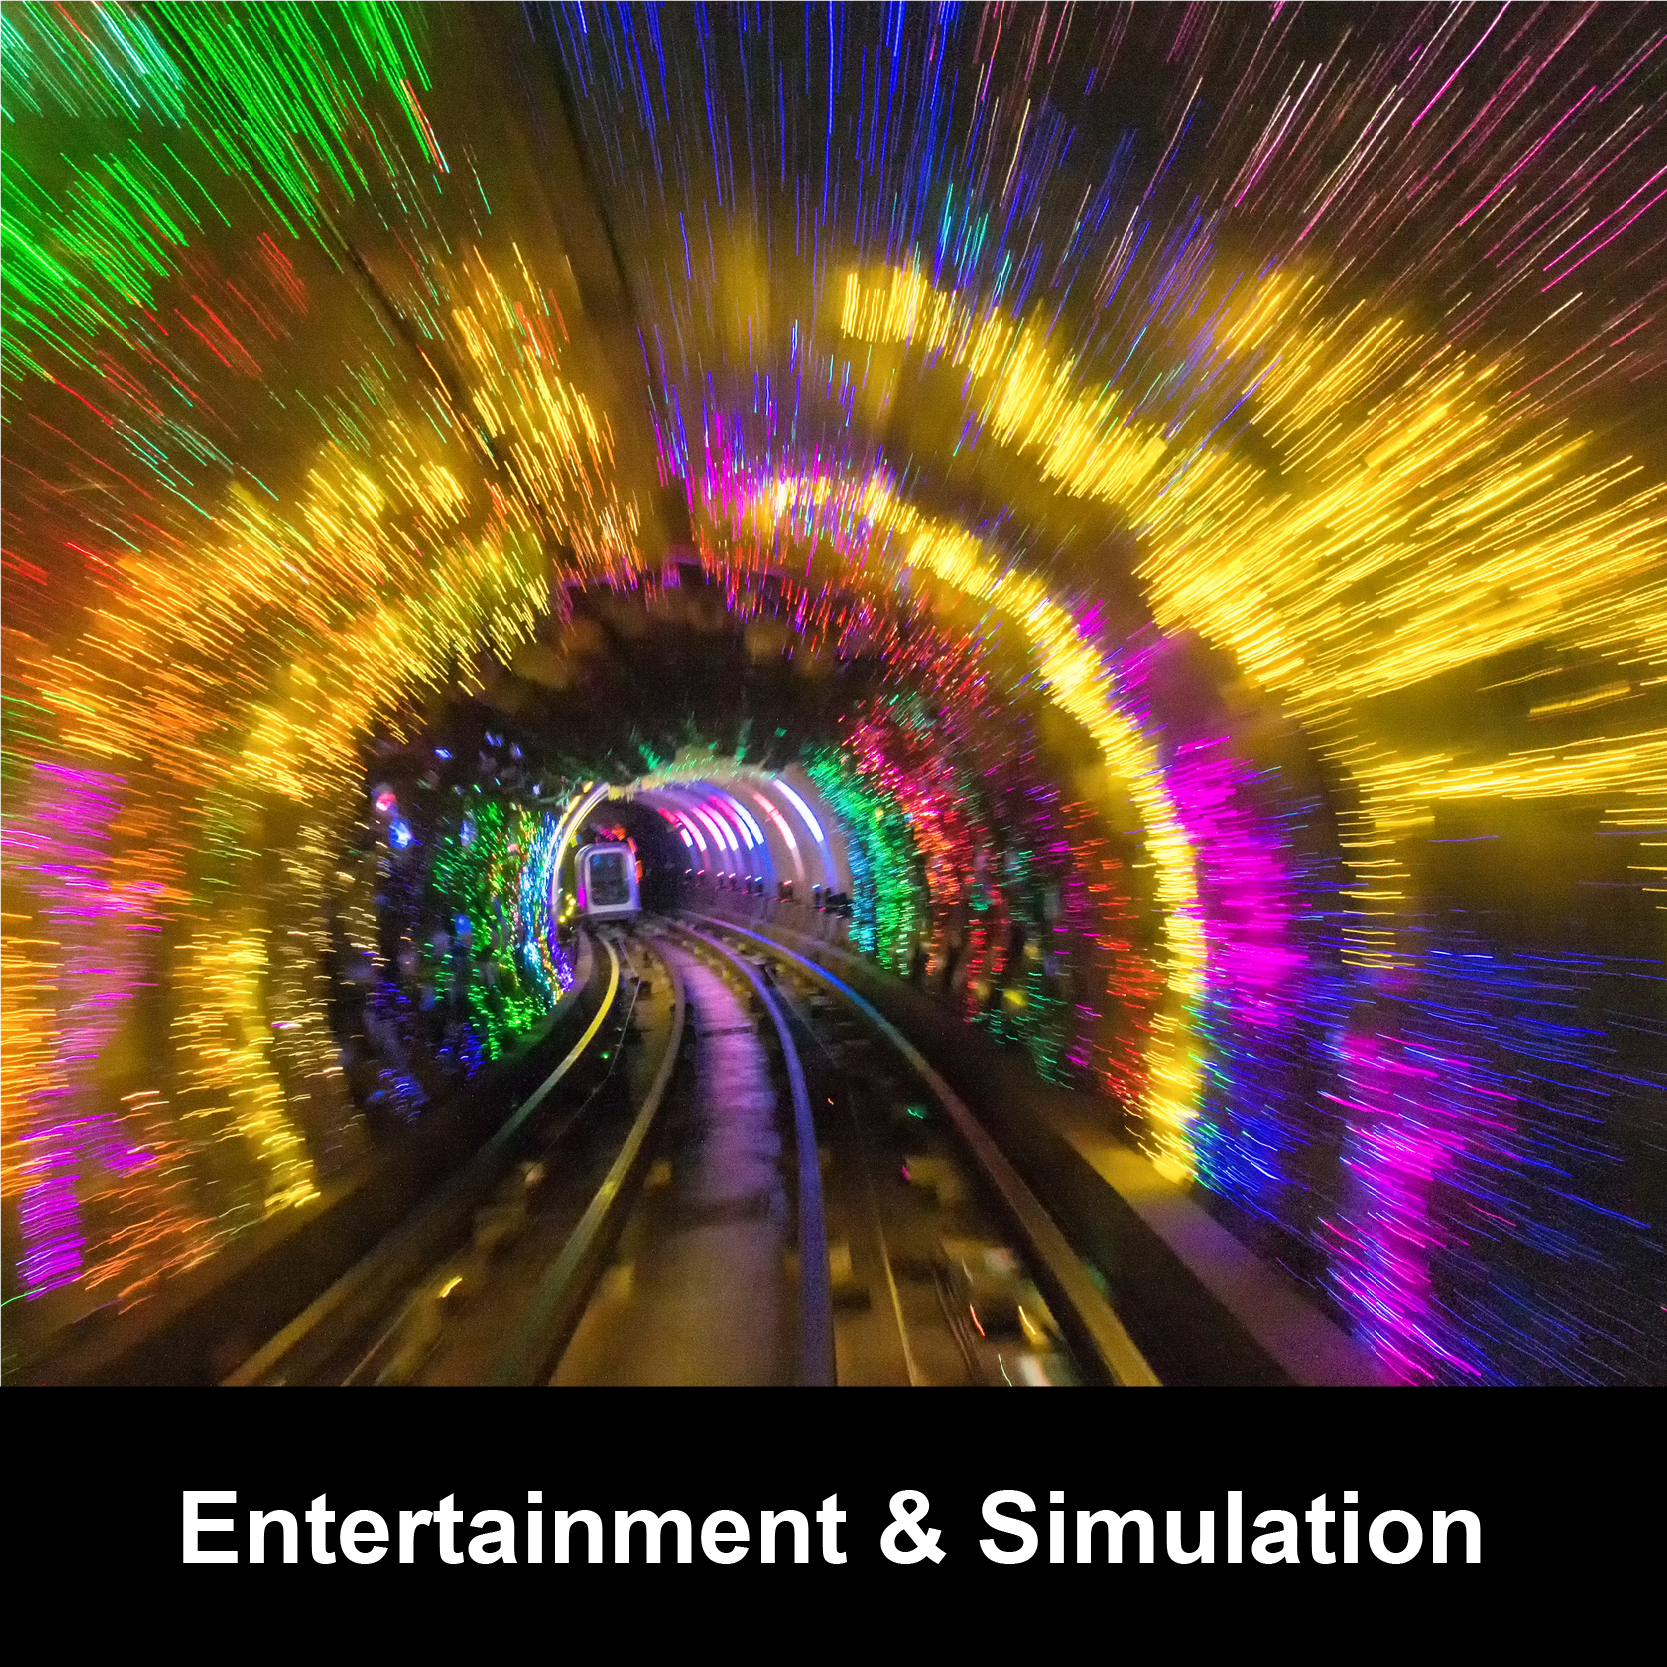 Entertainment & Simulation